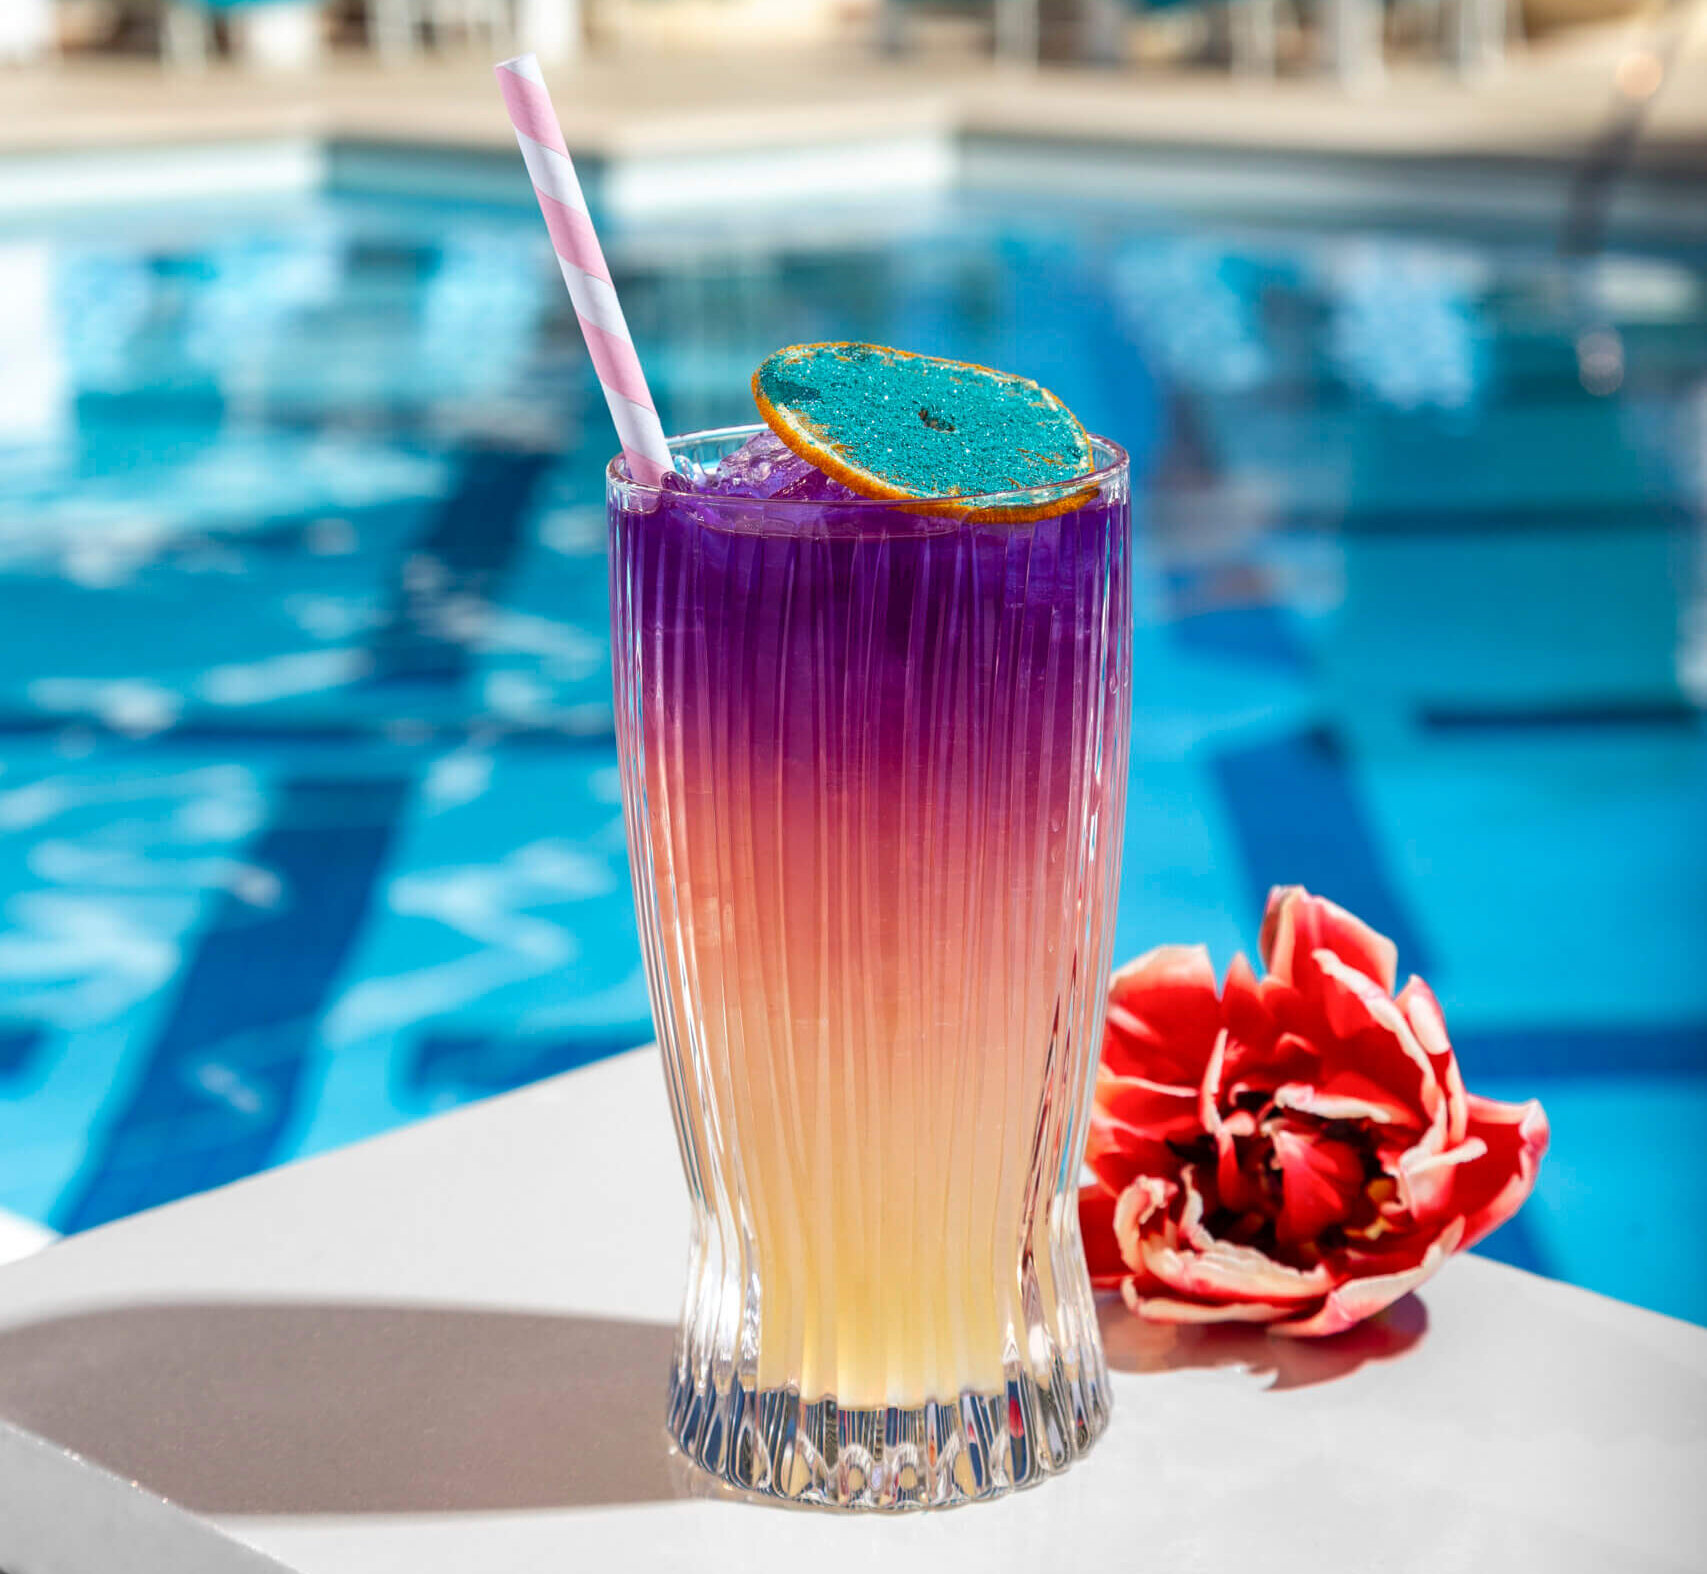 Summertime cocktails, menu, and hideaway pool adds to fun at Topgolf Las  Vegas - Food & Beverage Magazine